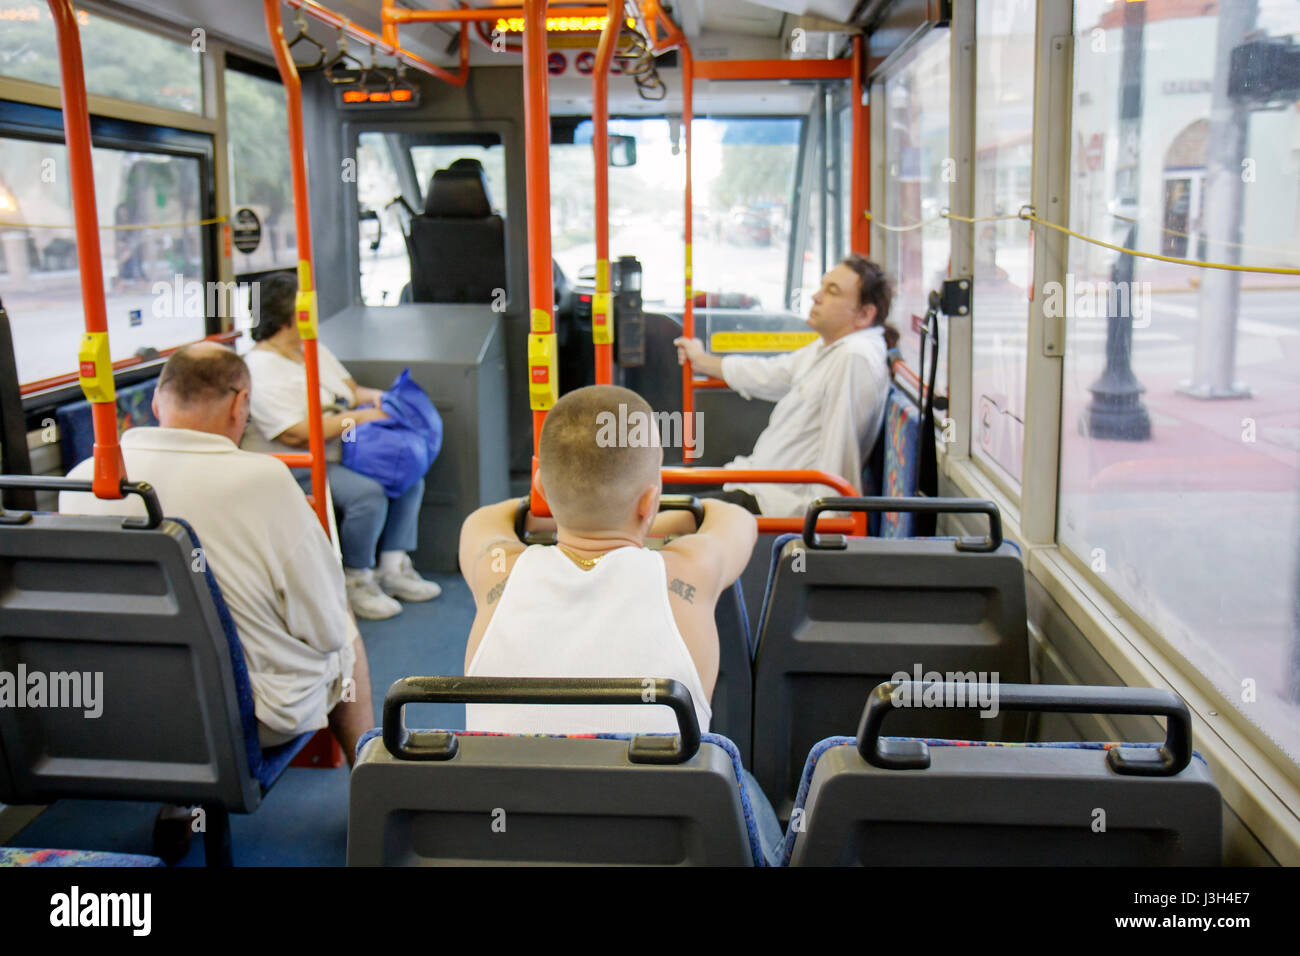 Metrobus miami dade fotografías e imágenes de alta resolución - Alamy